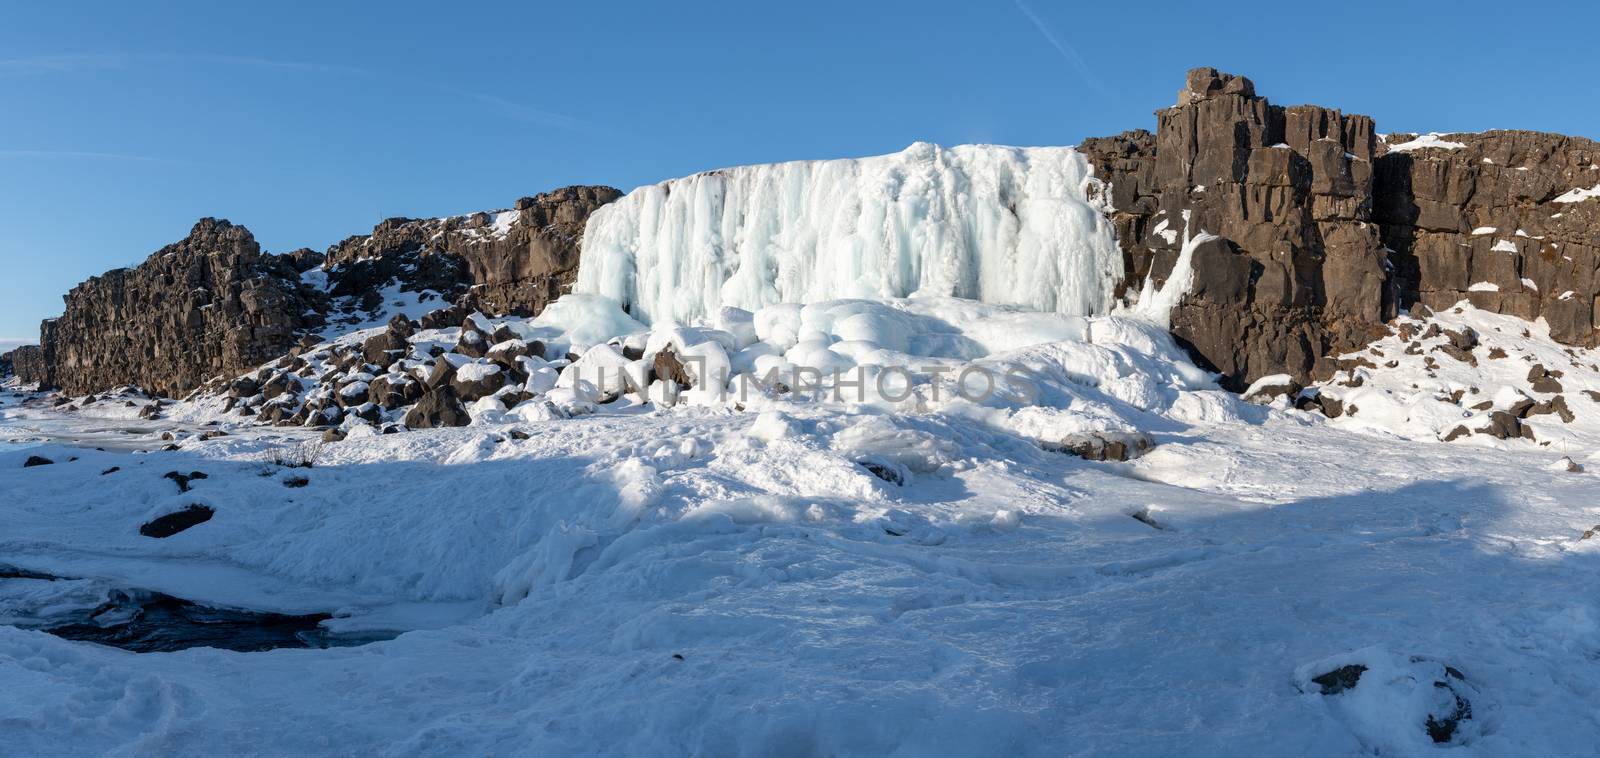 Frozen waterfall Oexararfoss within the Thingvellir National Park, Iceland, Europe